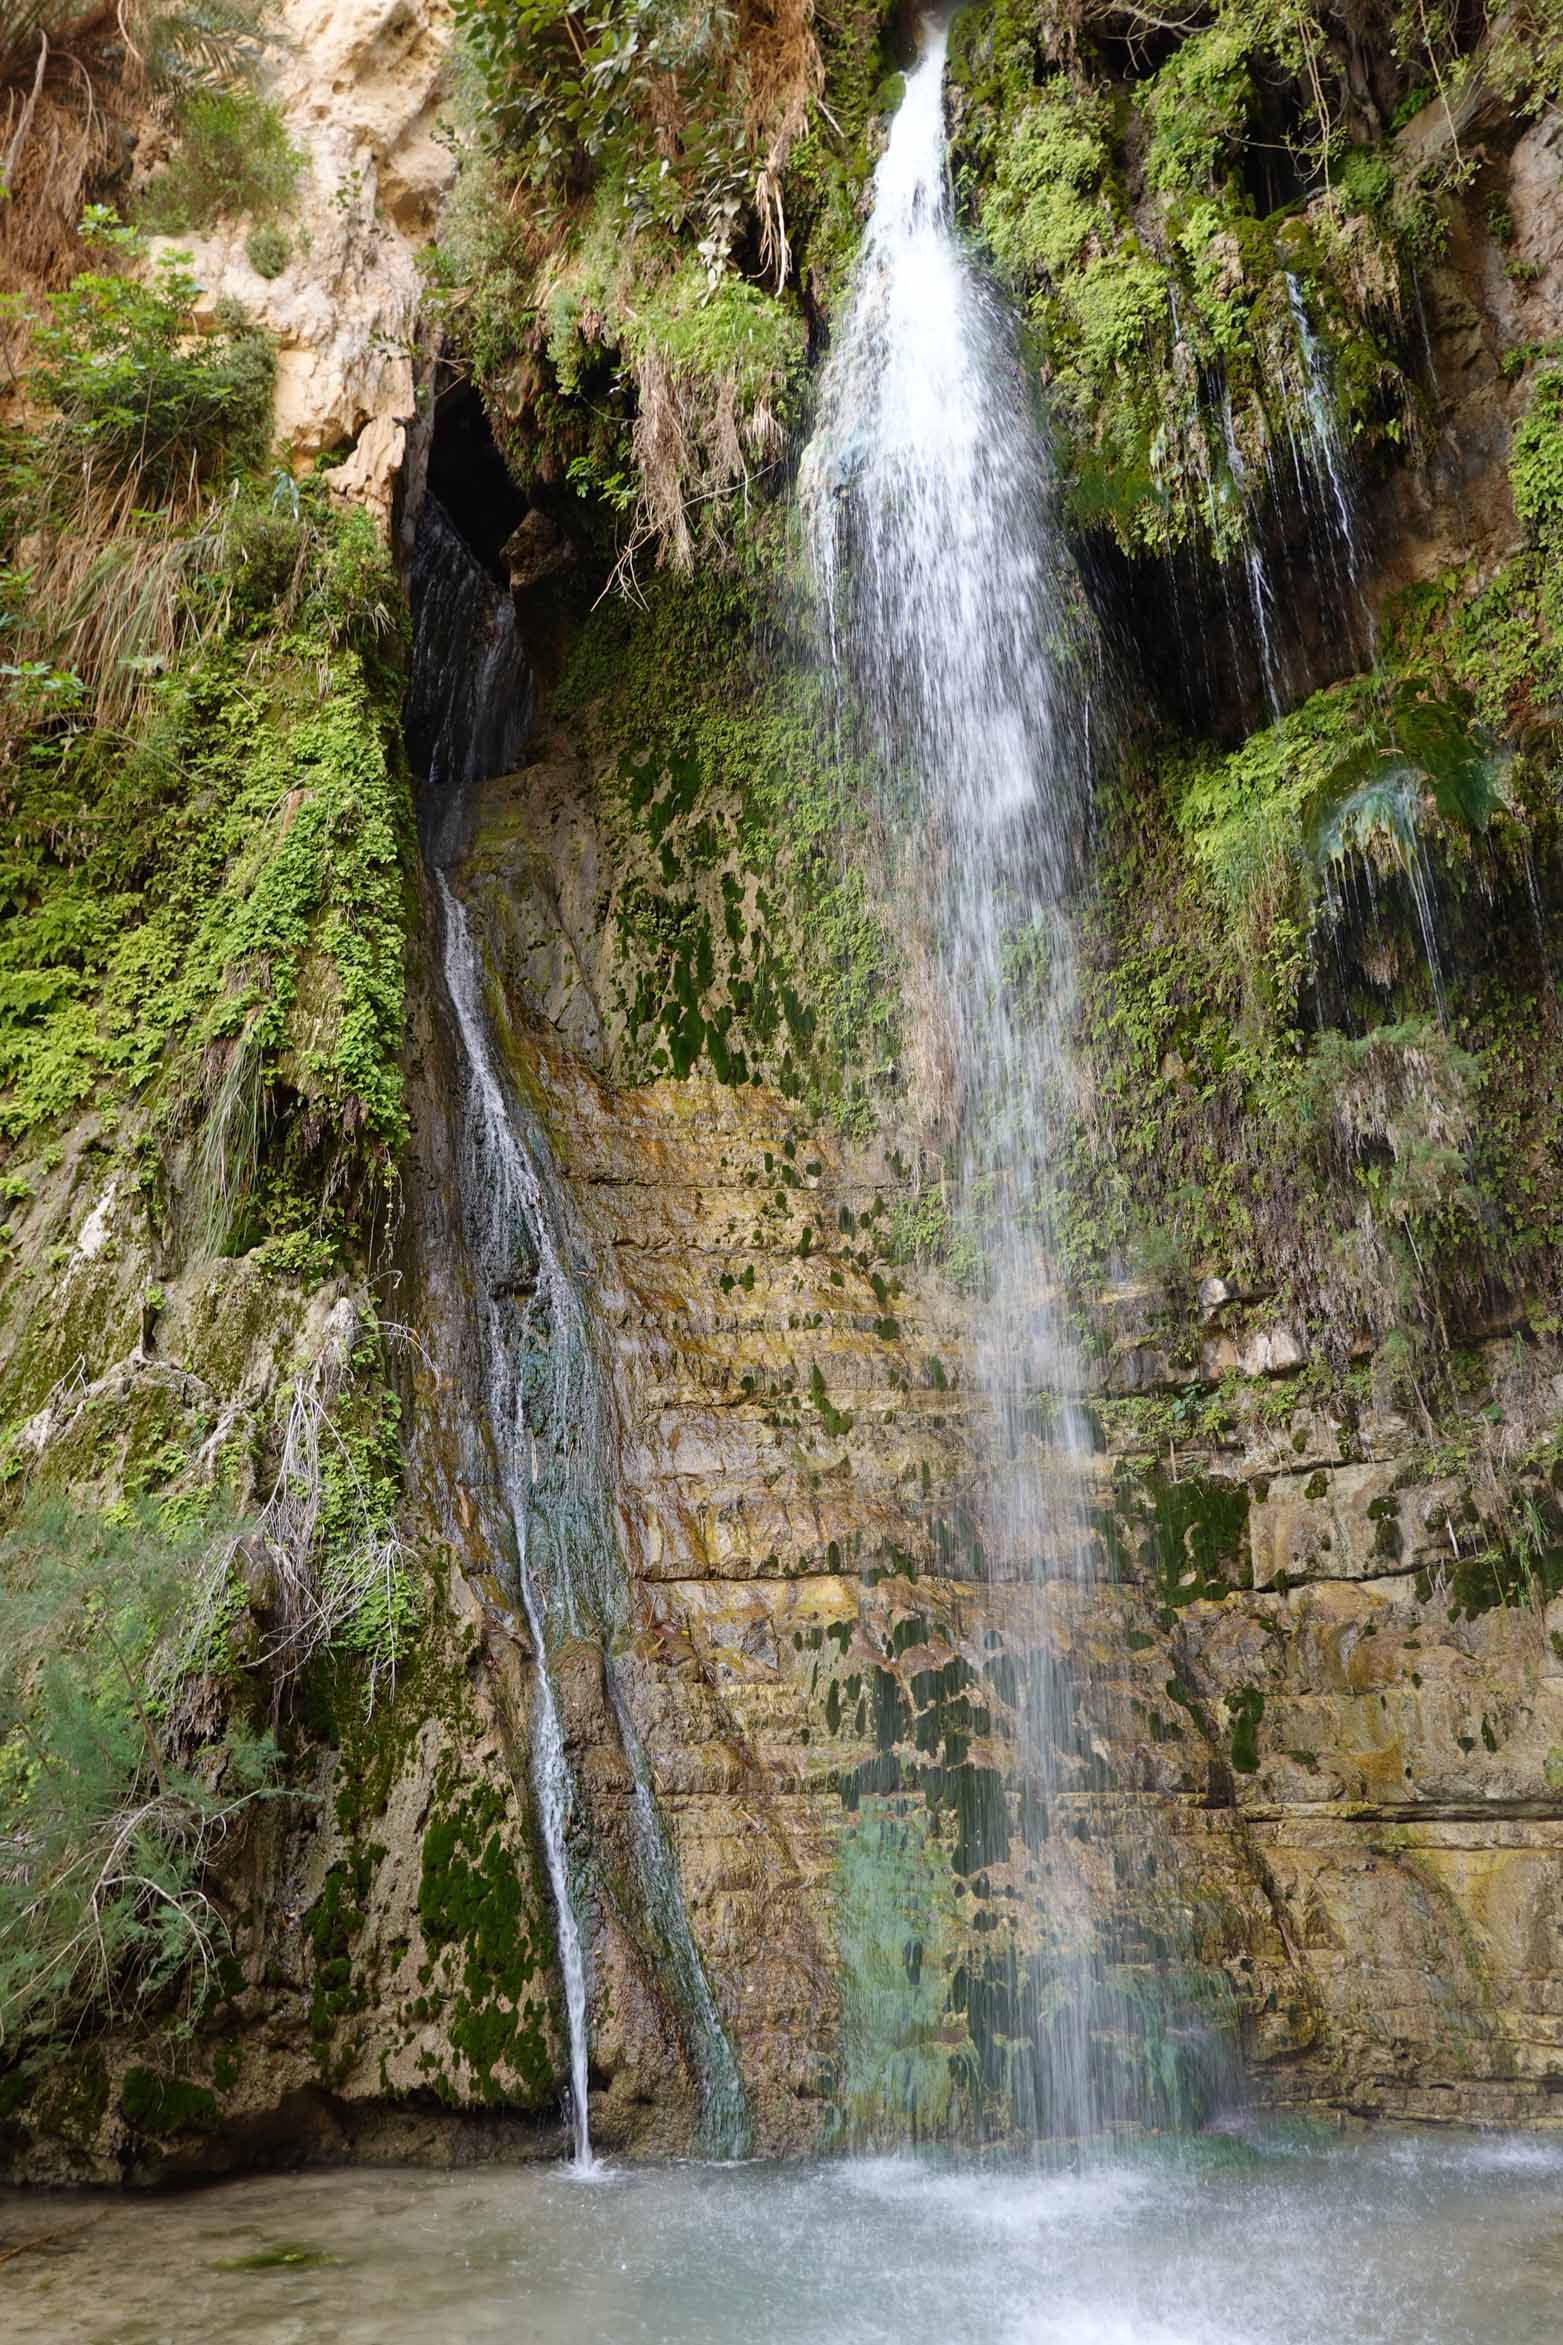 David Waterfall of the Ein Gedi Nature Reserve